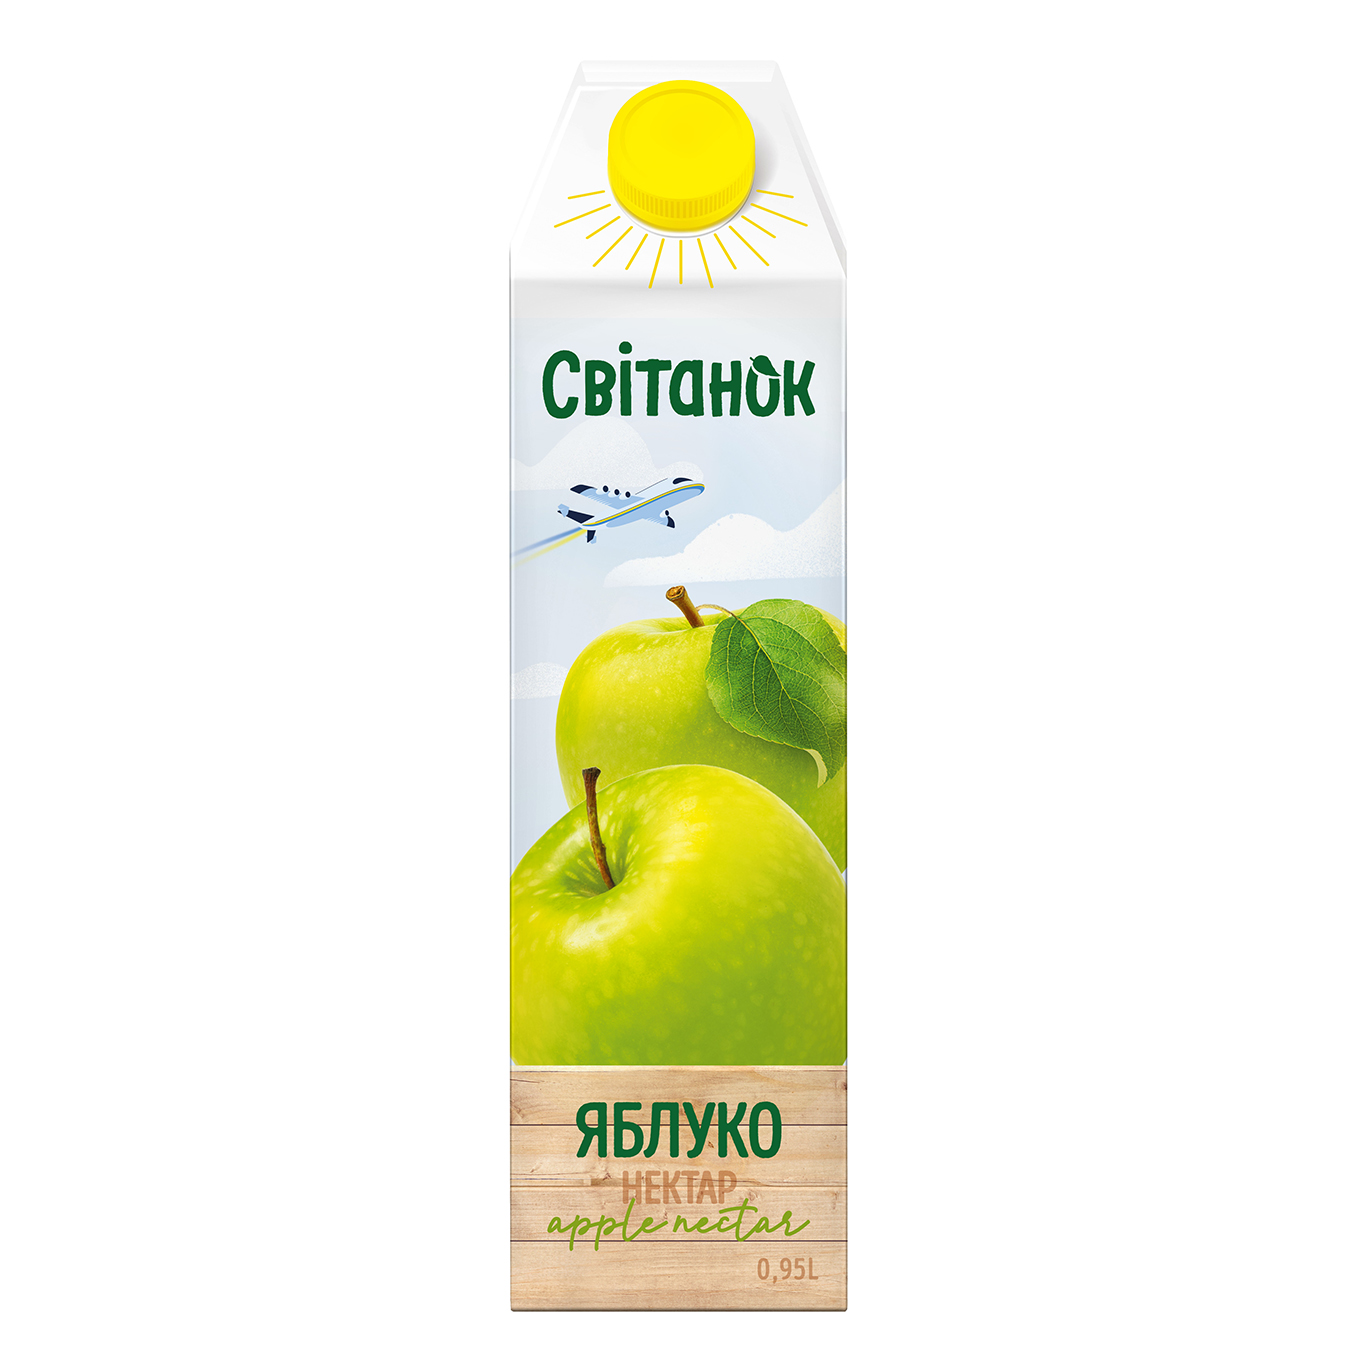 Nectar Svitanok apple clarified pasteurized 0.95 l